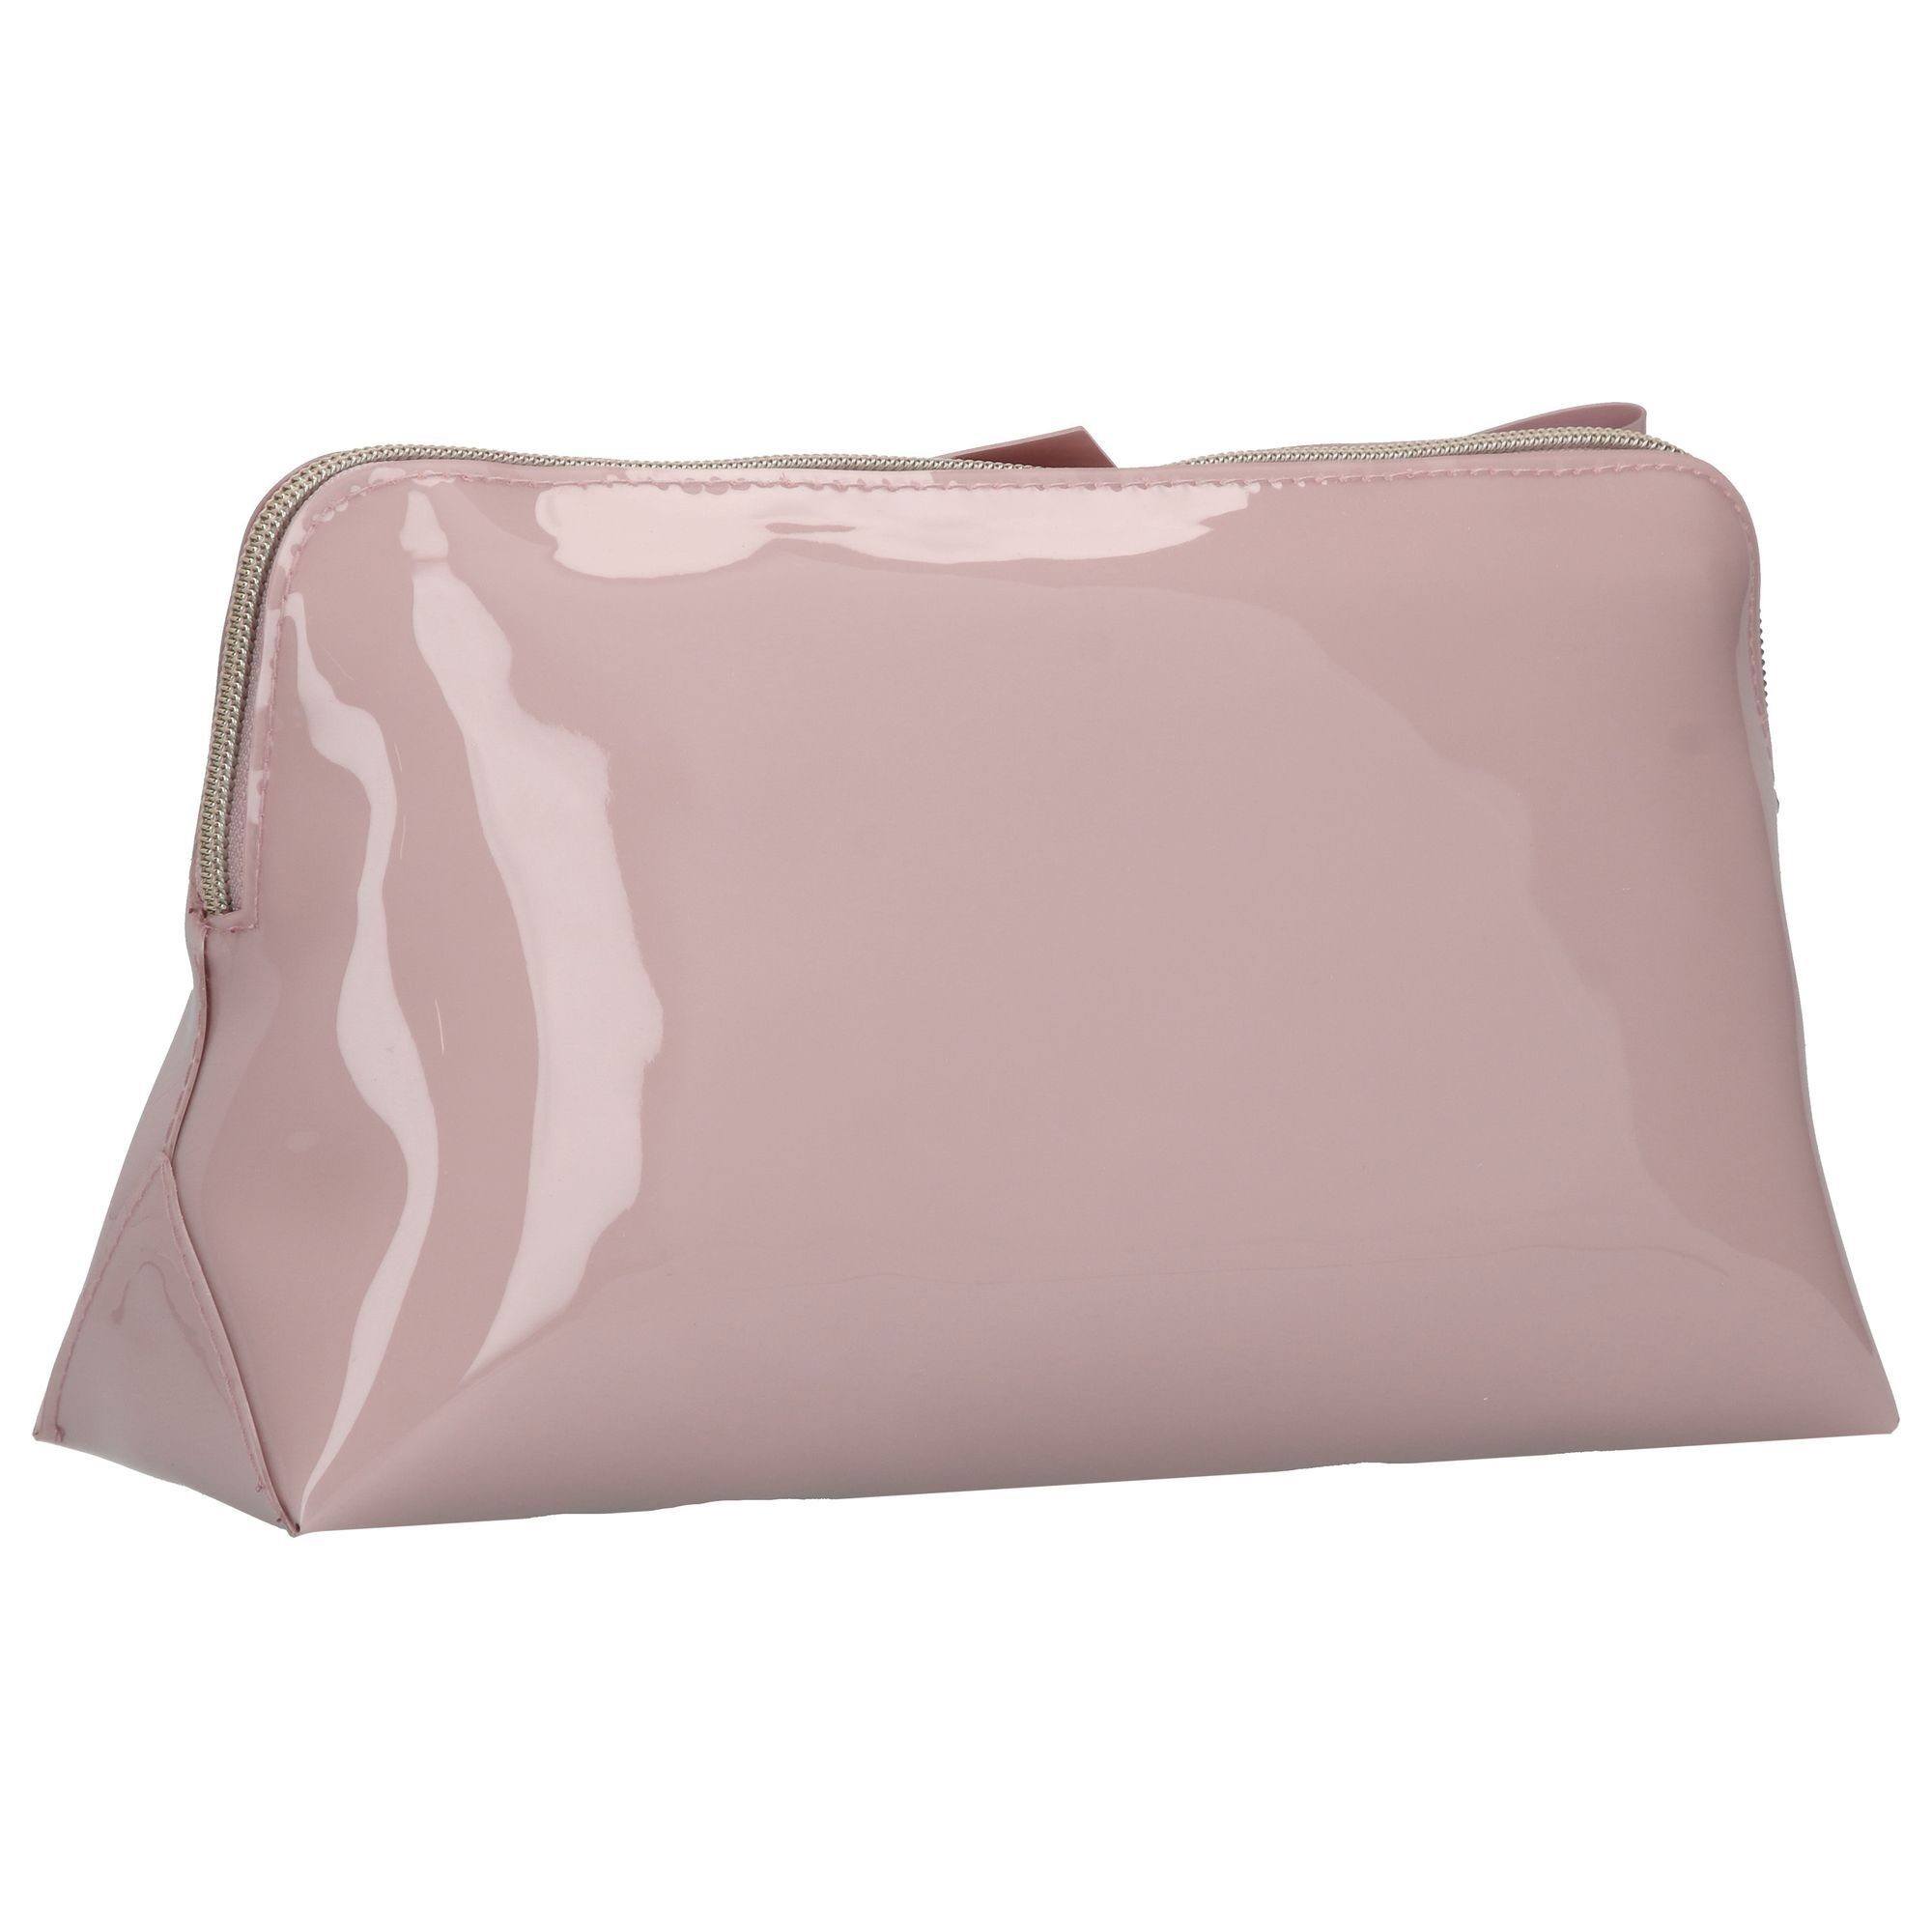 Baker Ted Kosmetiktasche, pl-pink PVC